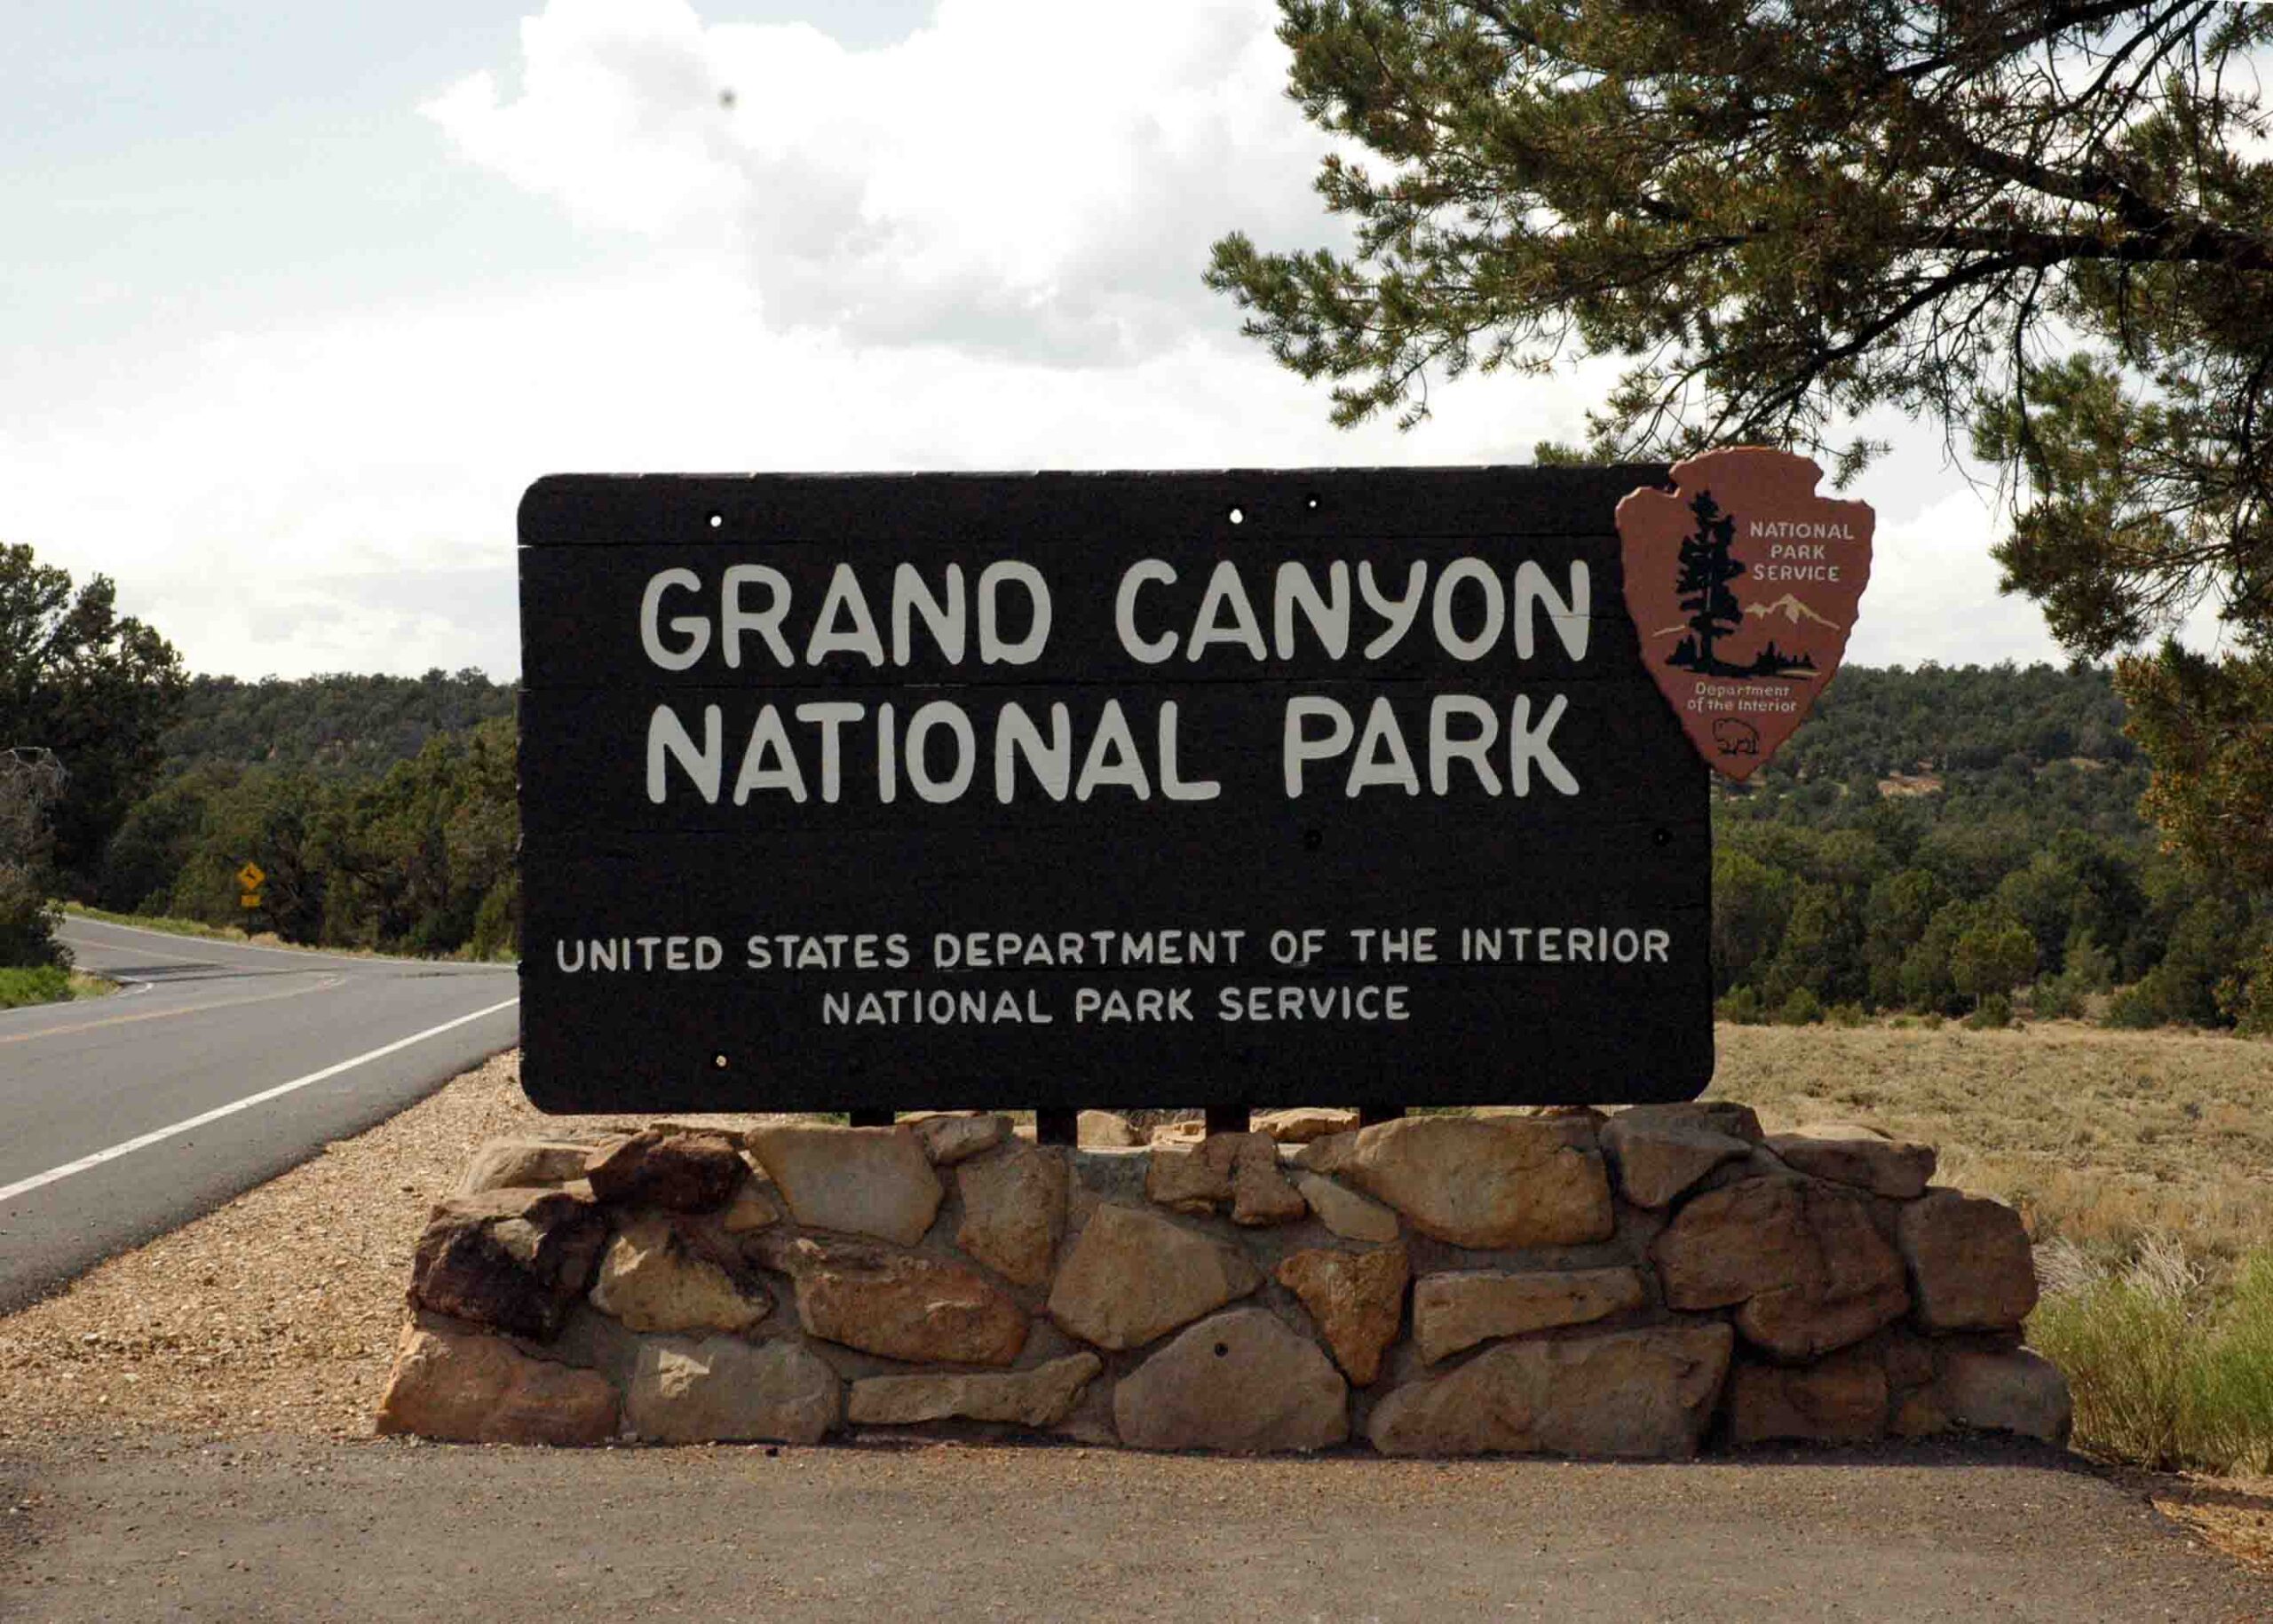 02/18/16 : Grand Canyon Sexual Harassment Complaints Fuels National Park Service Reform